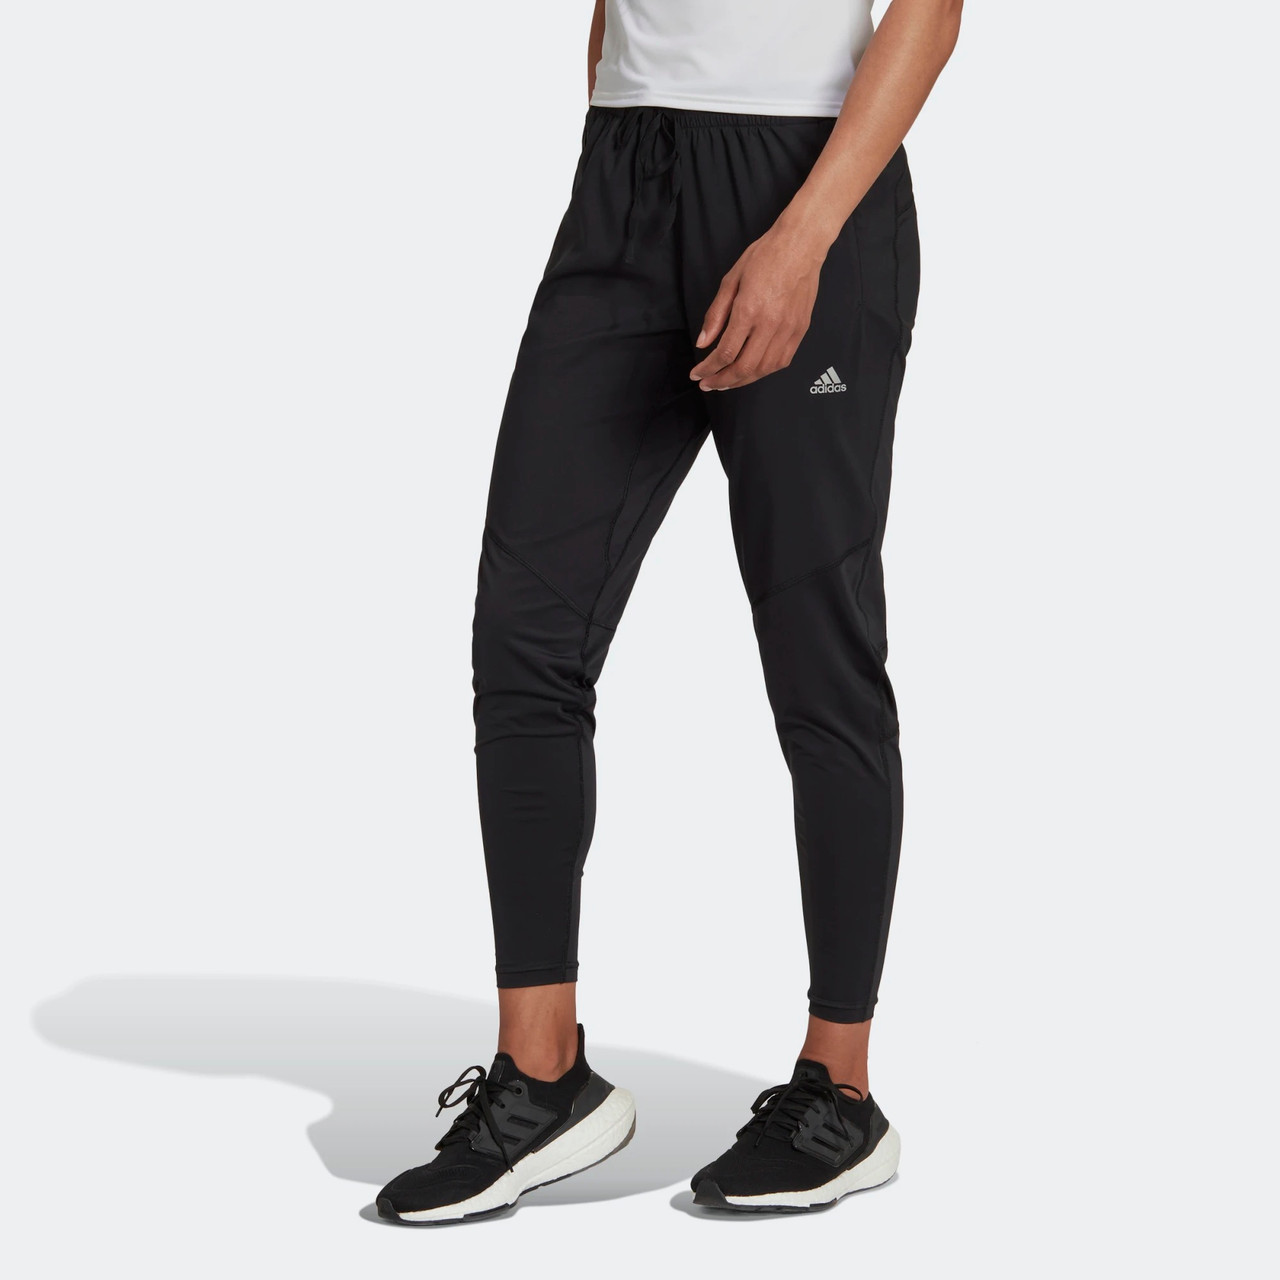 Adidas Fast Womens Running Pant Black - Pushys